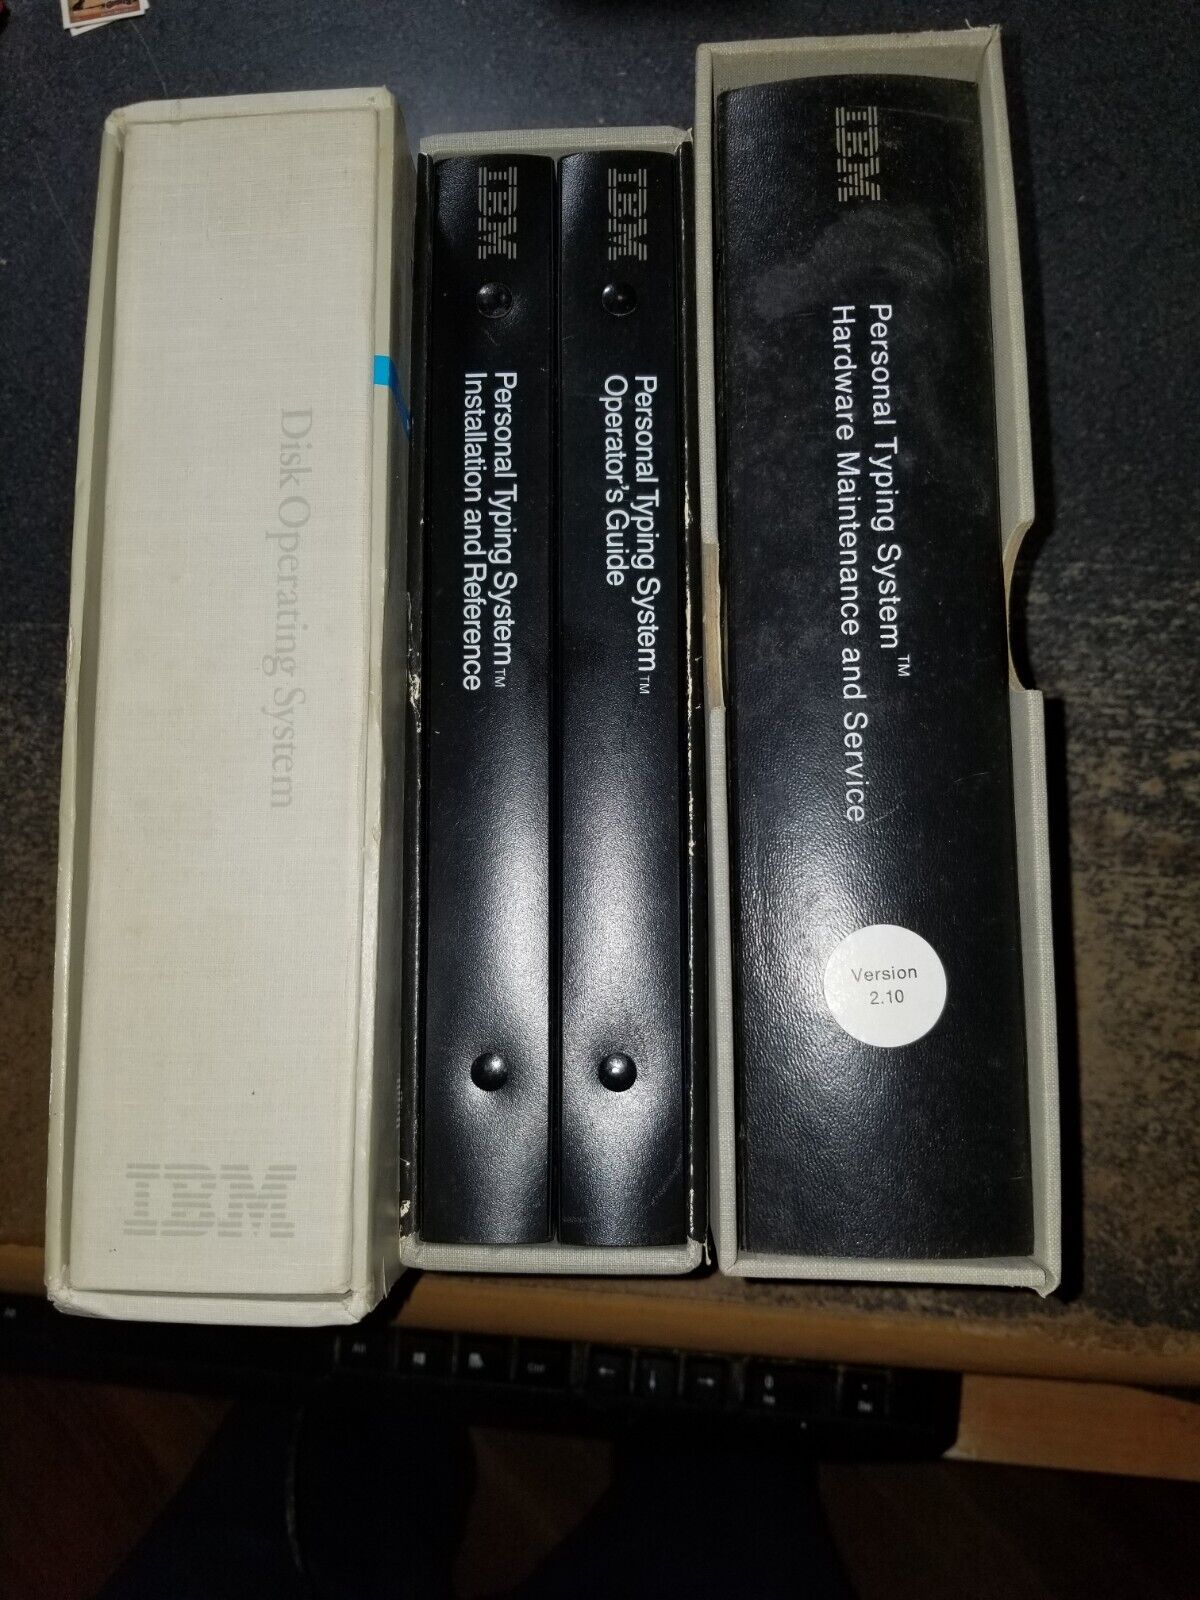 IBM Vintage Operating System Binder, Other Manuals in original boxes. Has discs.